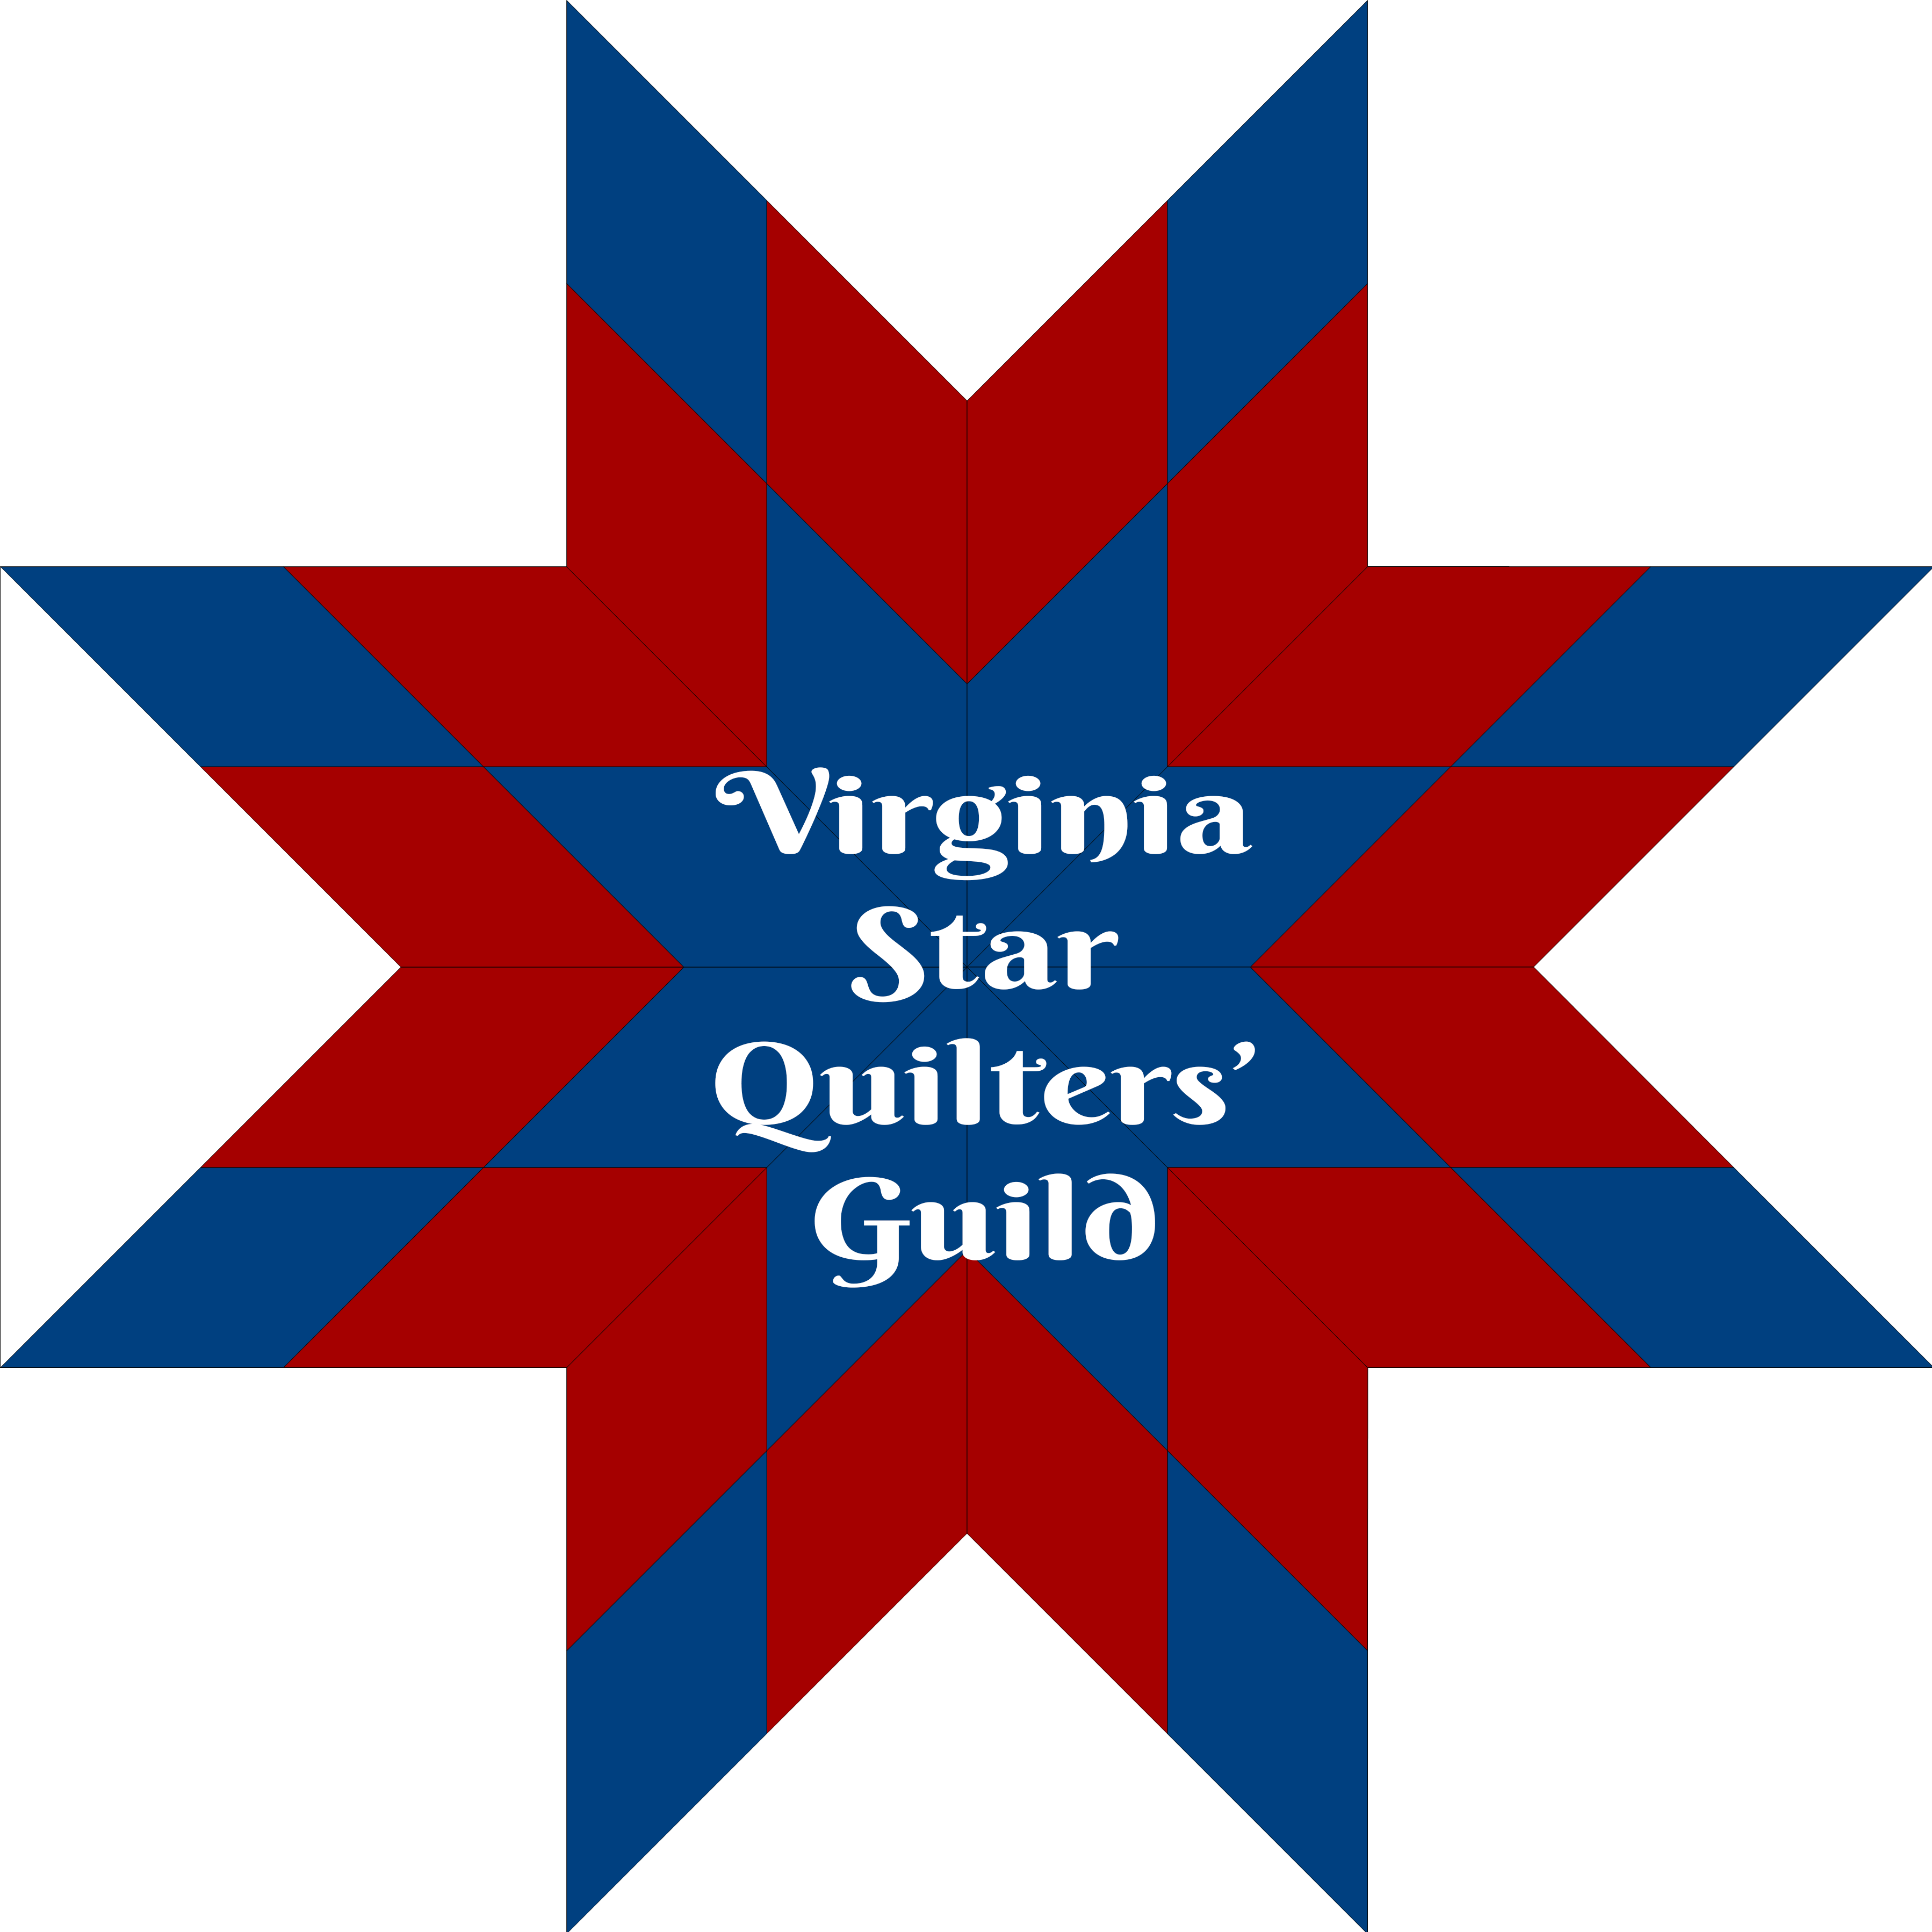 Virginia Star Quilters' Guild logo